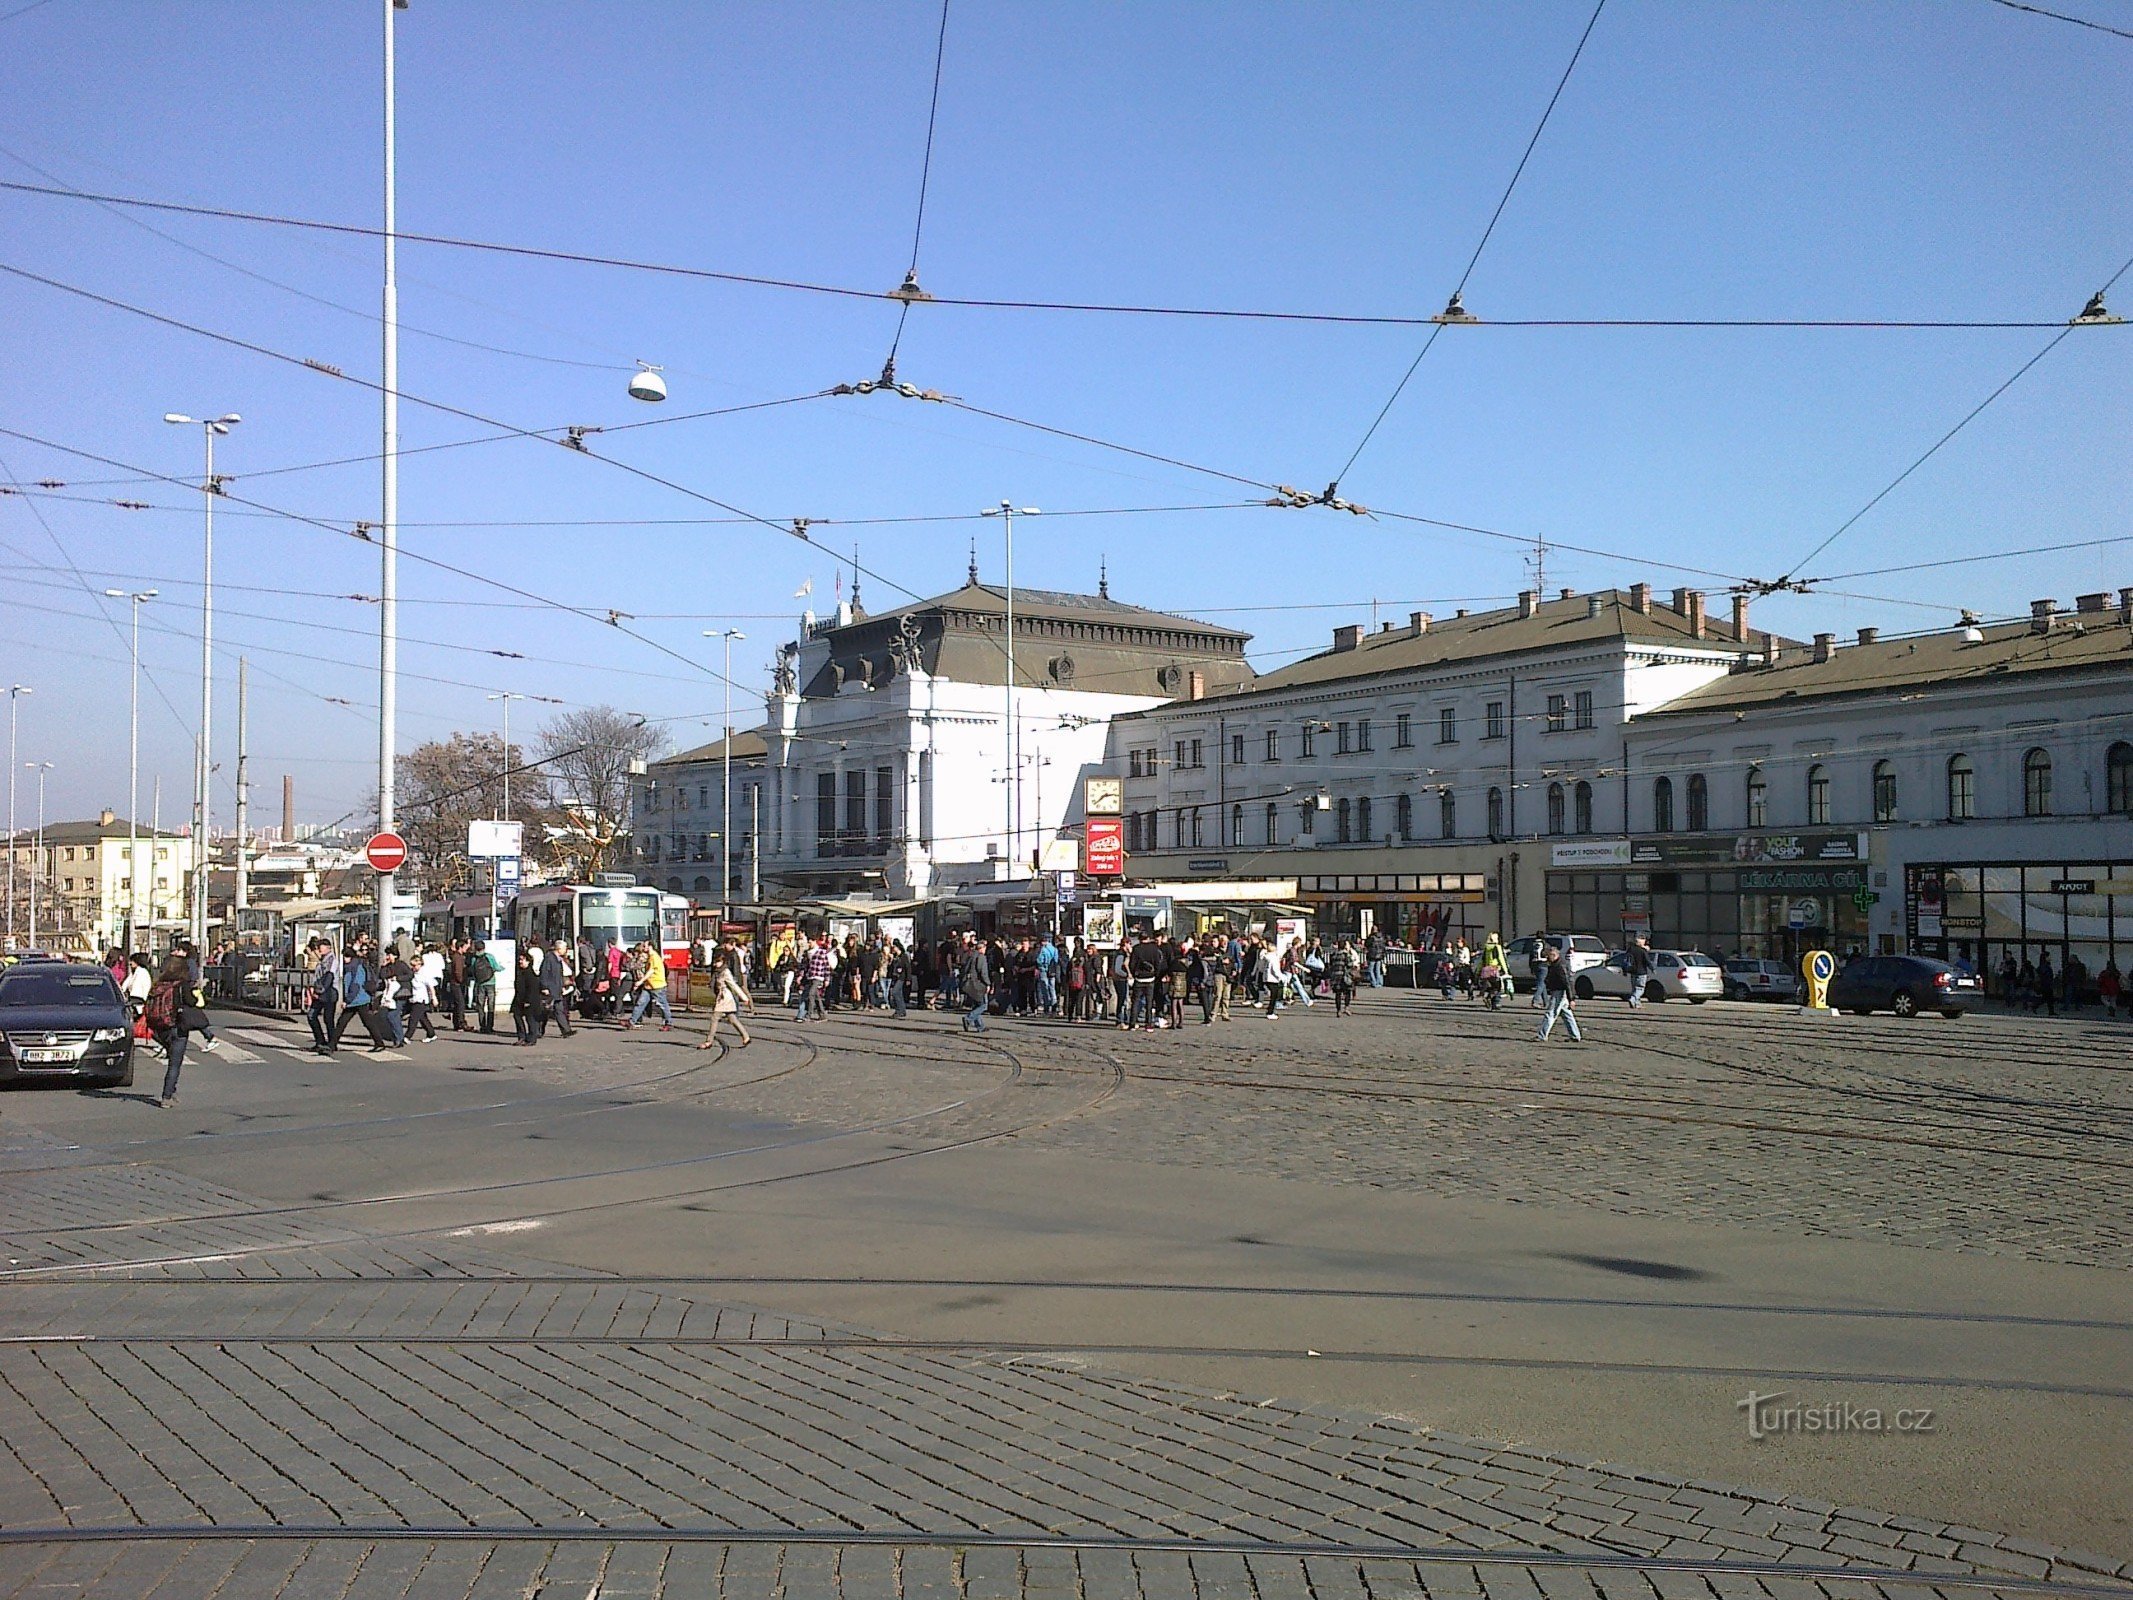 Start - Brno main station